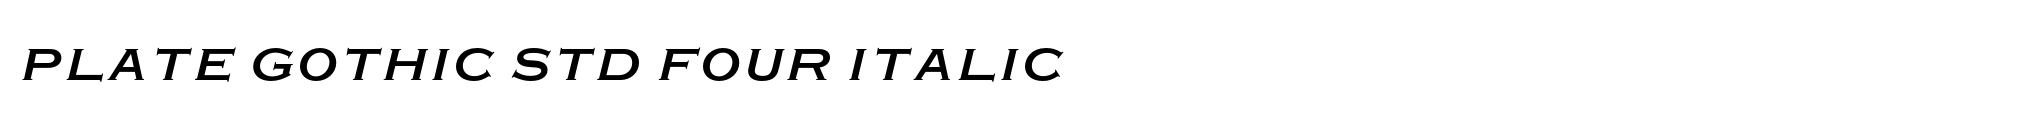 Plate Gothic Std Four Italic image